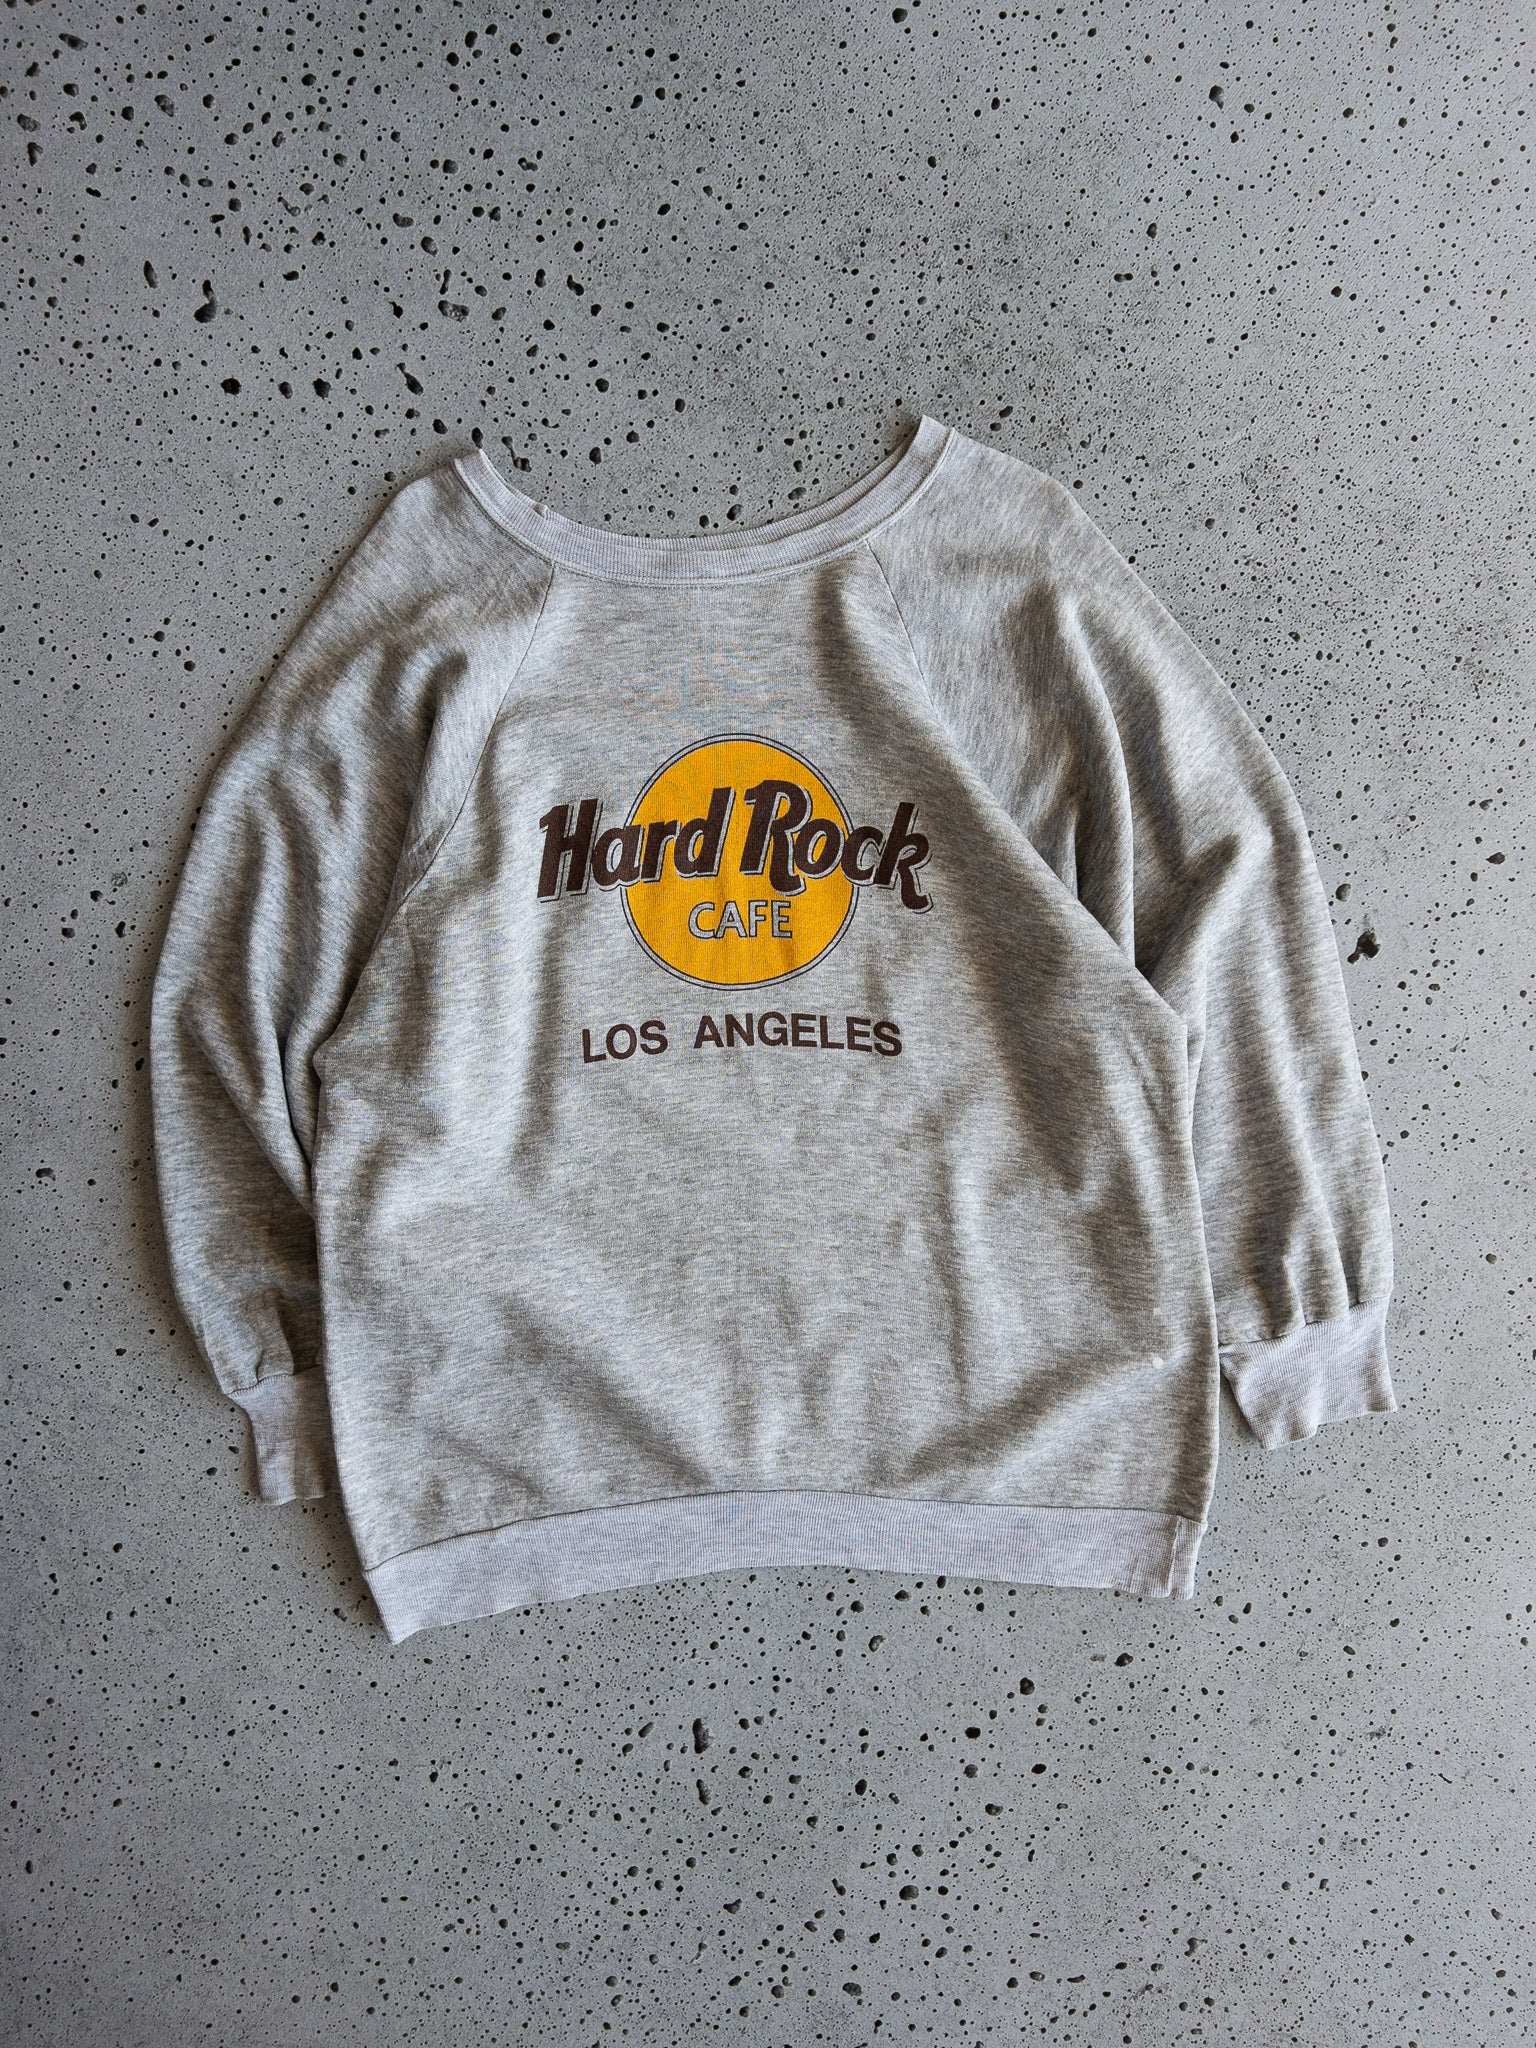 Vintage Hard Rock Cafe LA Sweatshirt (L)